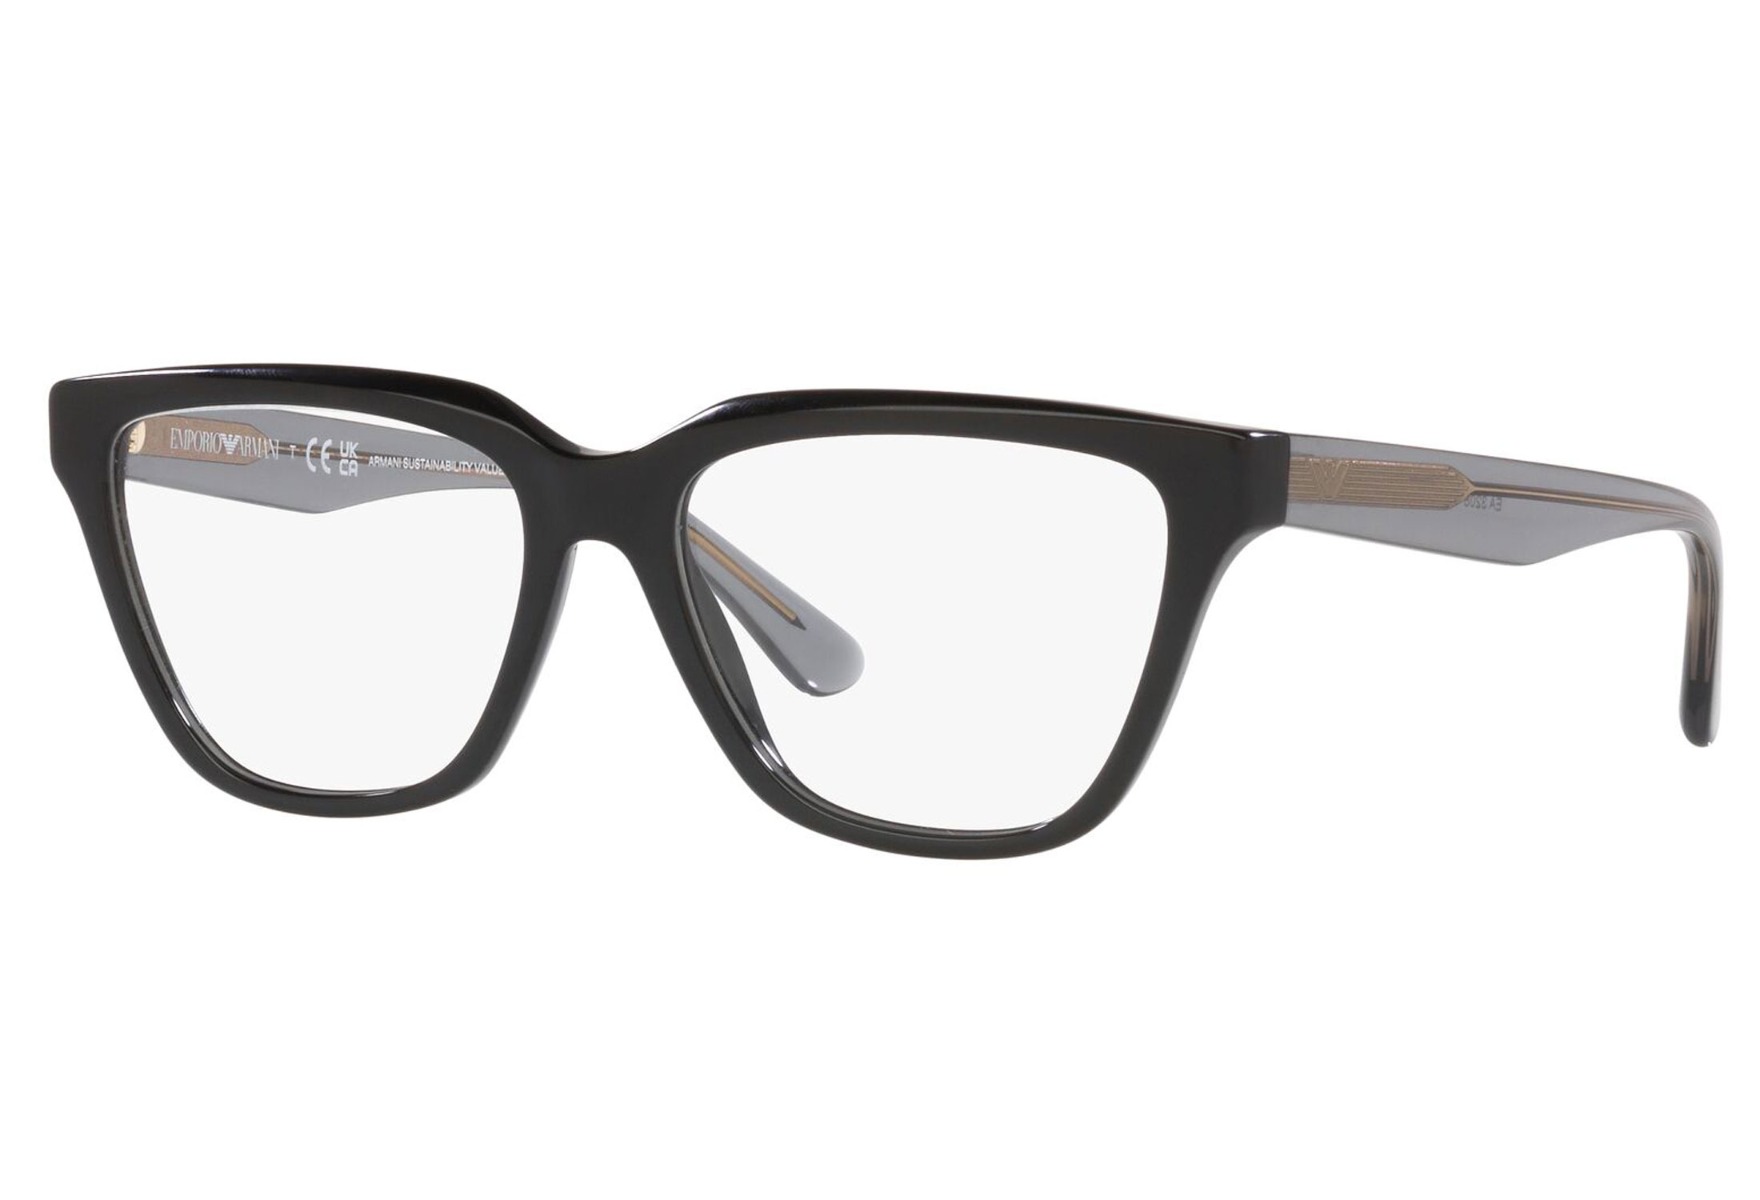 Armani briller fra Emporio Armani - ea3208 5017 - Svart